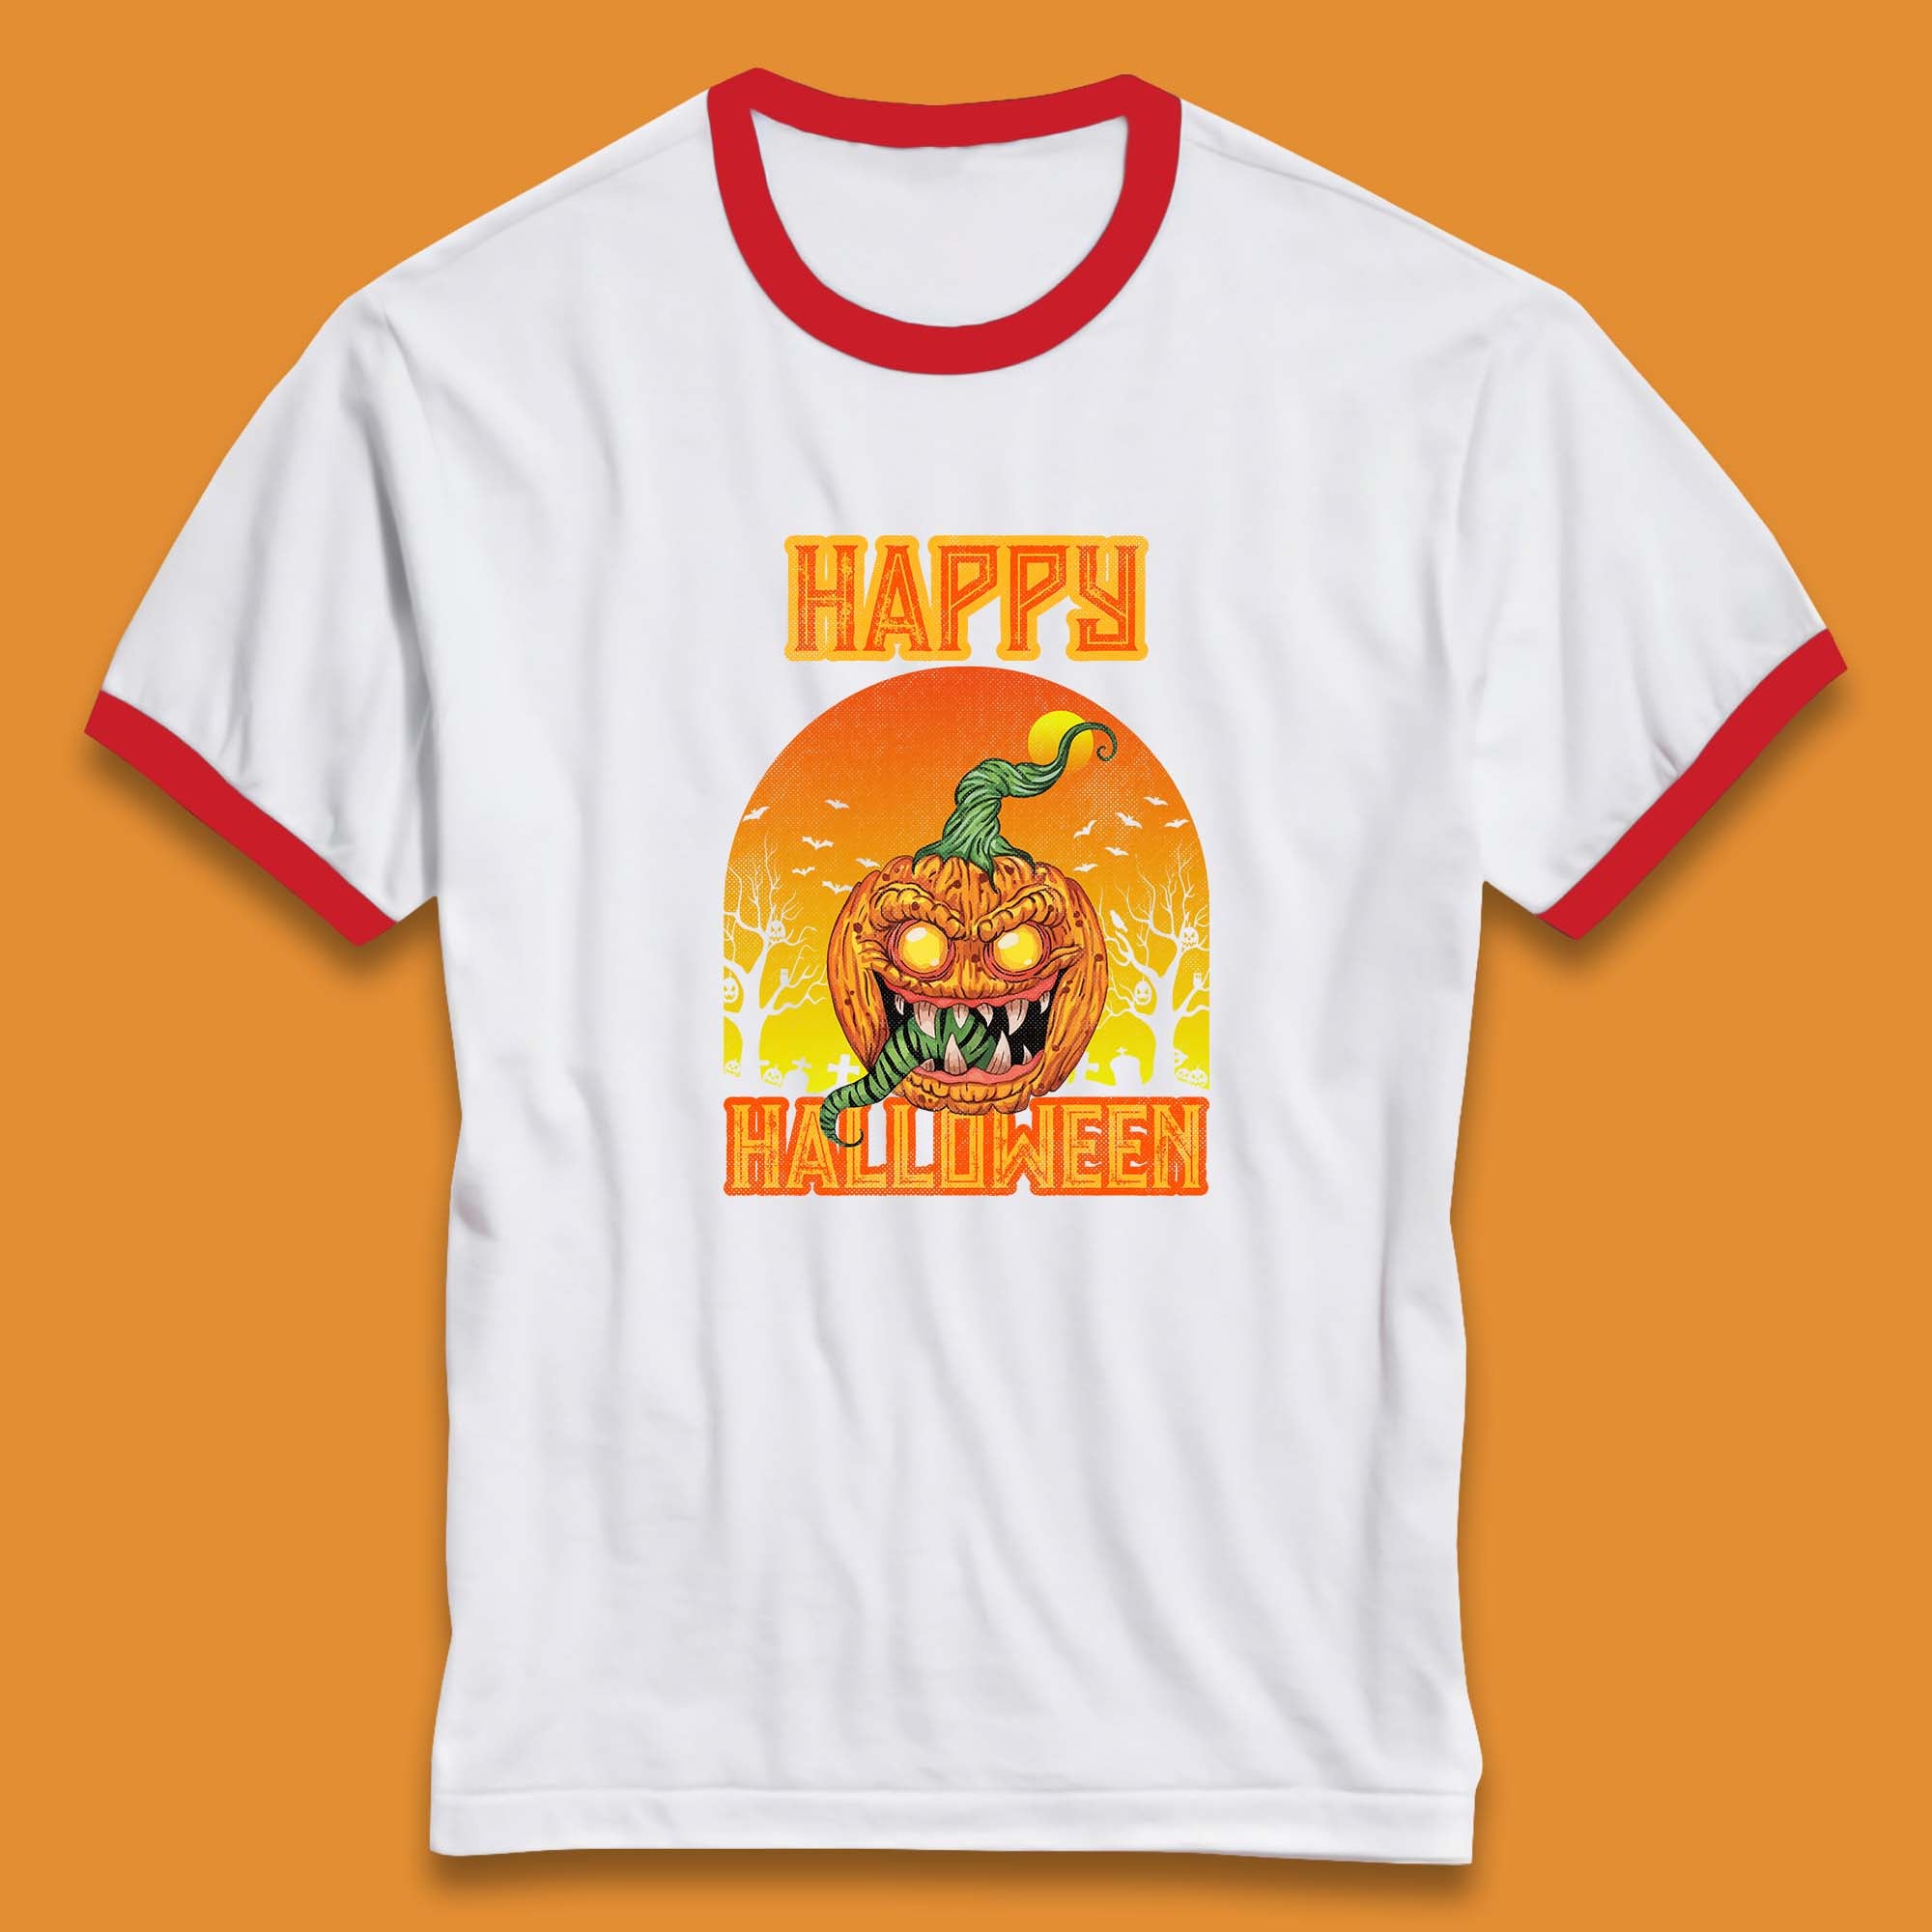 Happy Halloween Zombie Monster Pumpkin Jack-o-lantern Spooky Season Ringer T Shirt